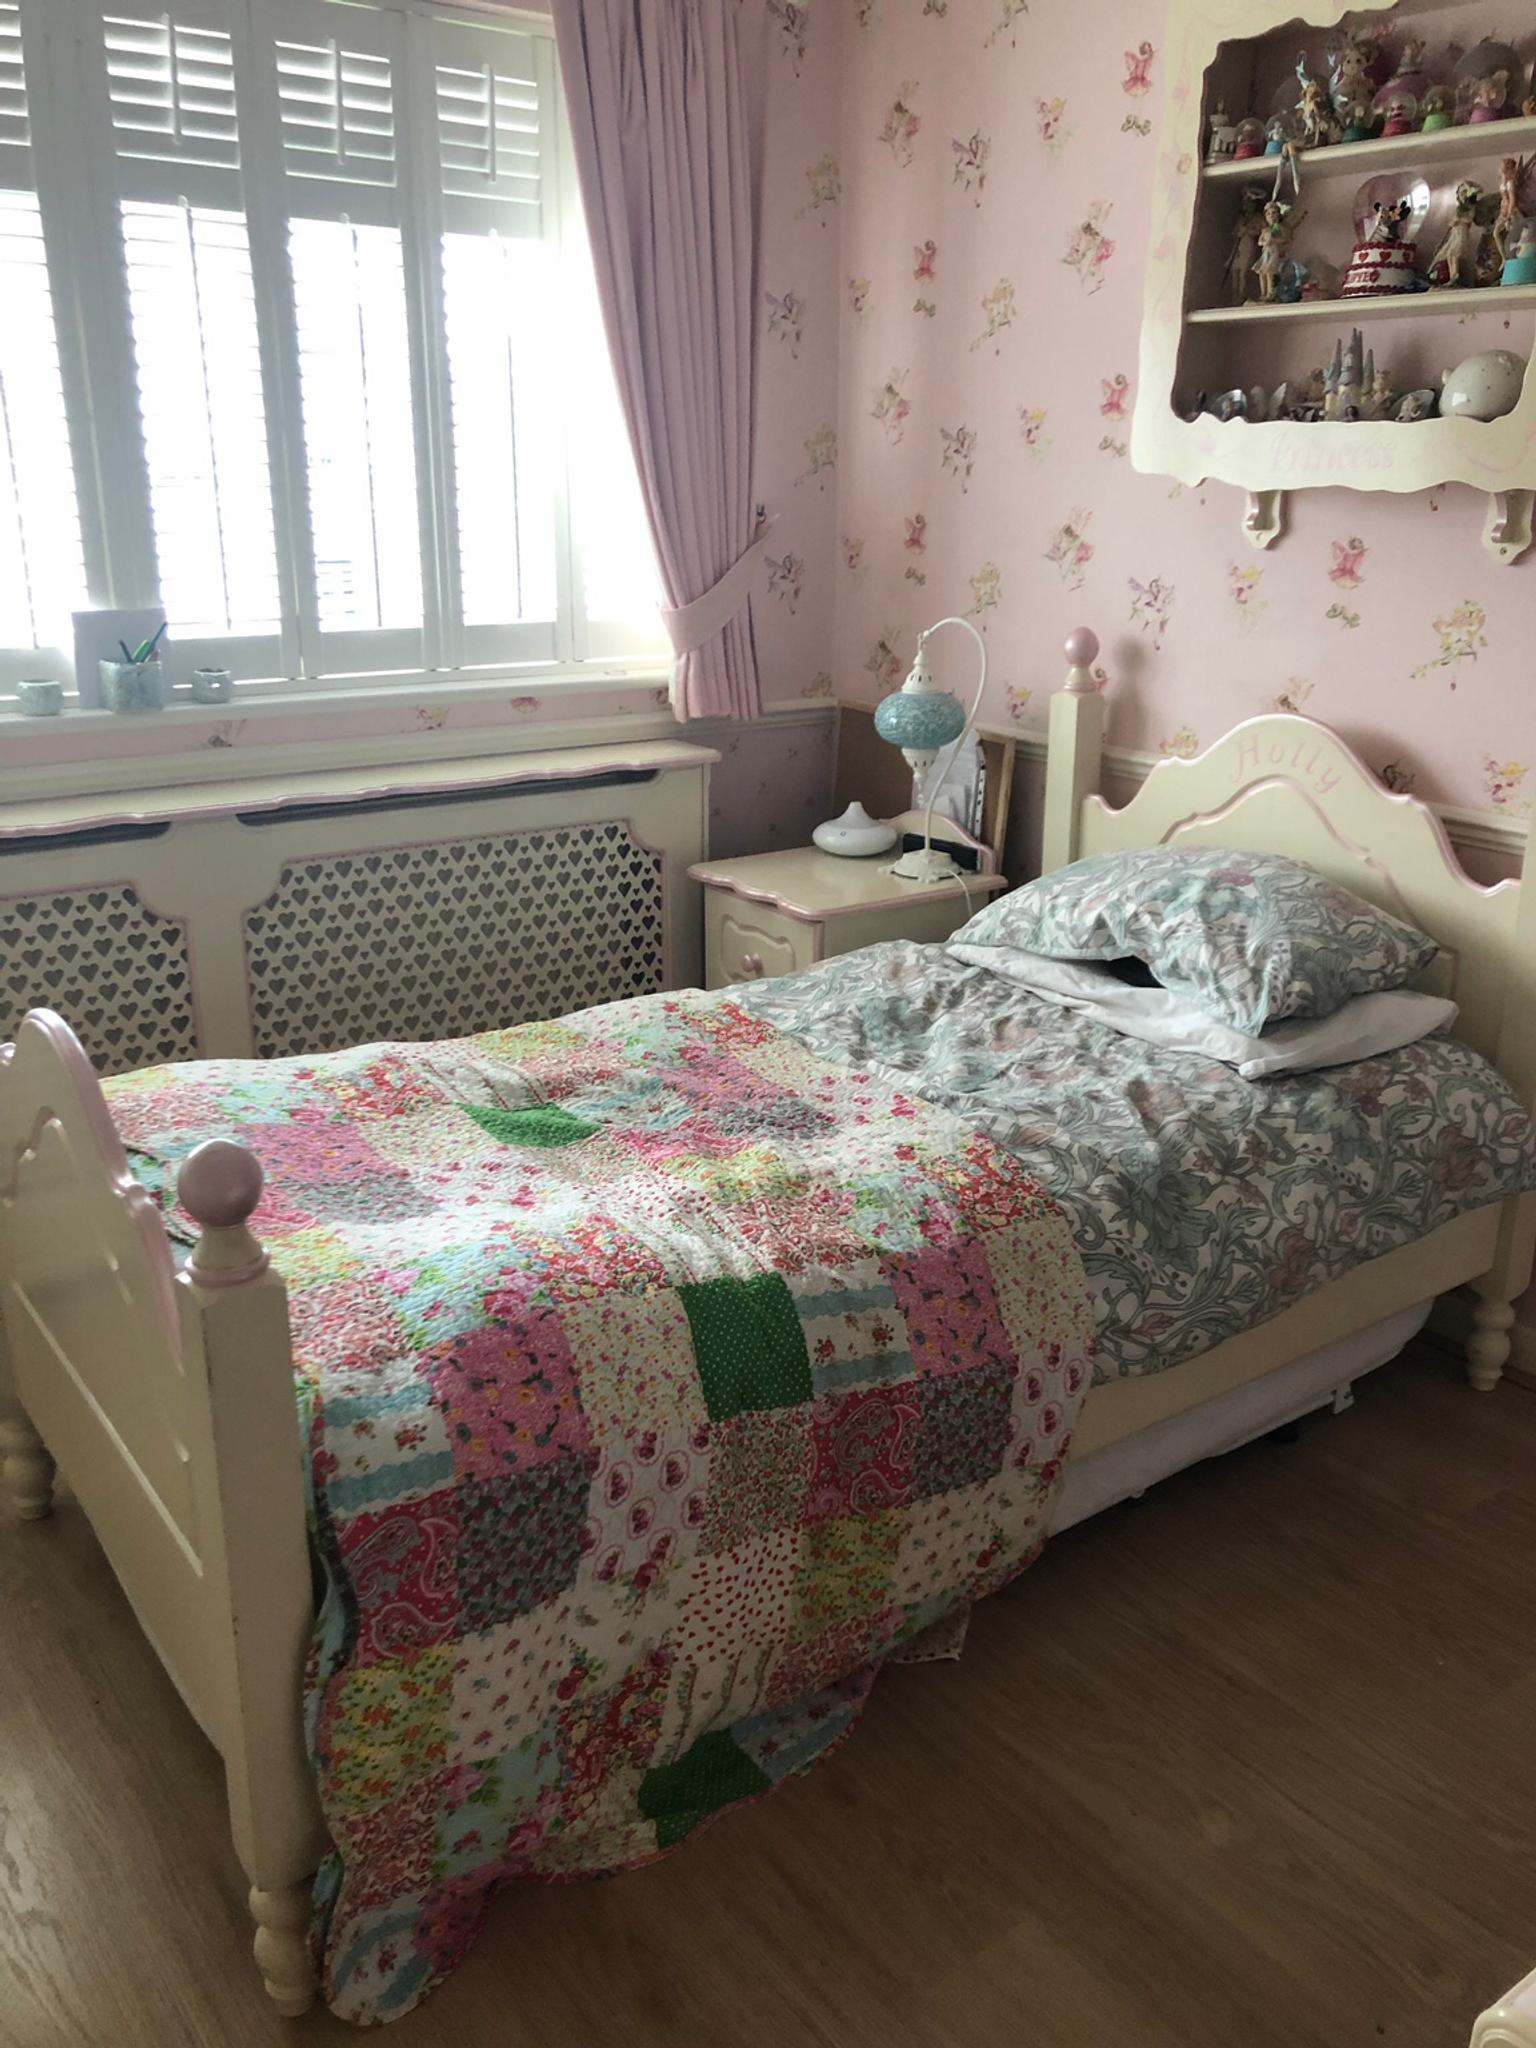 Girls Chartley Bedroom Furniture In Da7 Bexley Fur 500 00